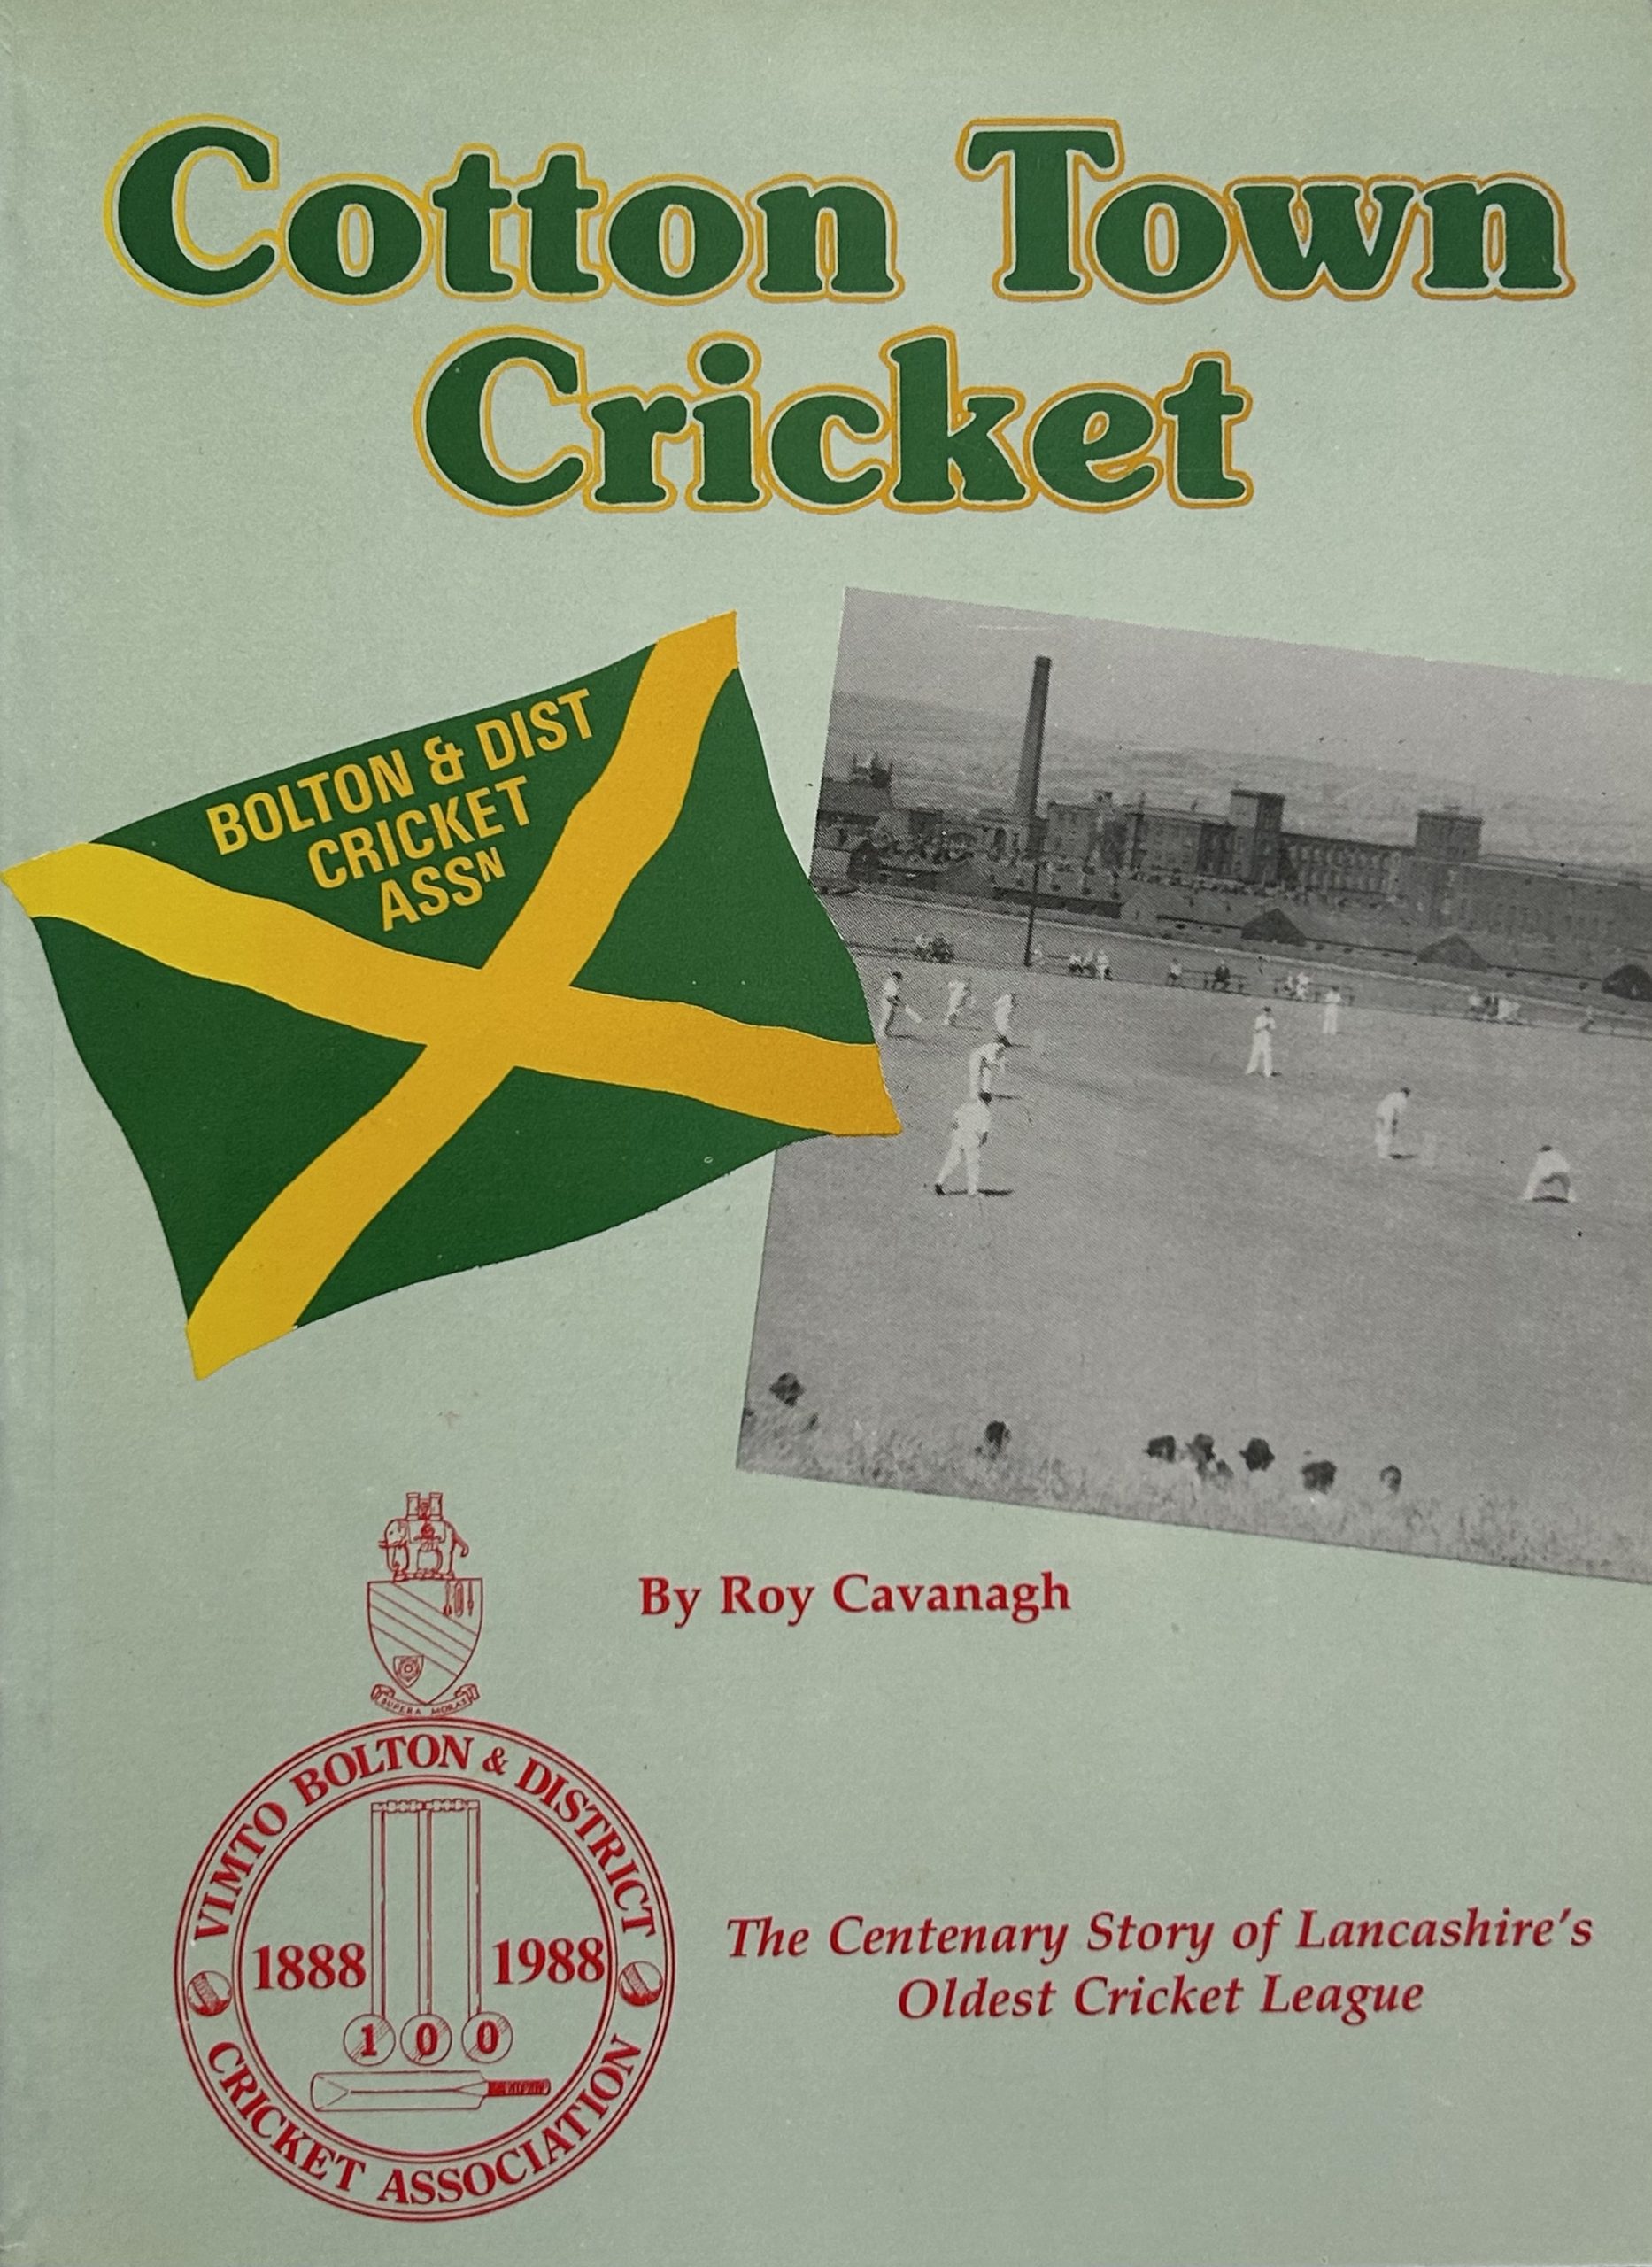 Cotton Town Cricket: Bolton & District Cricket Association - the Centenary Story